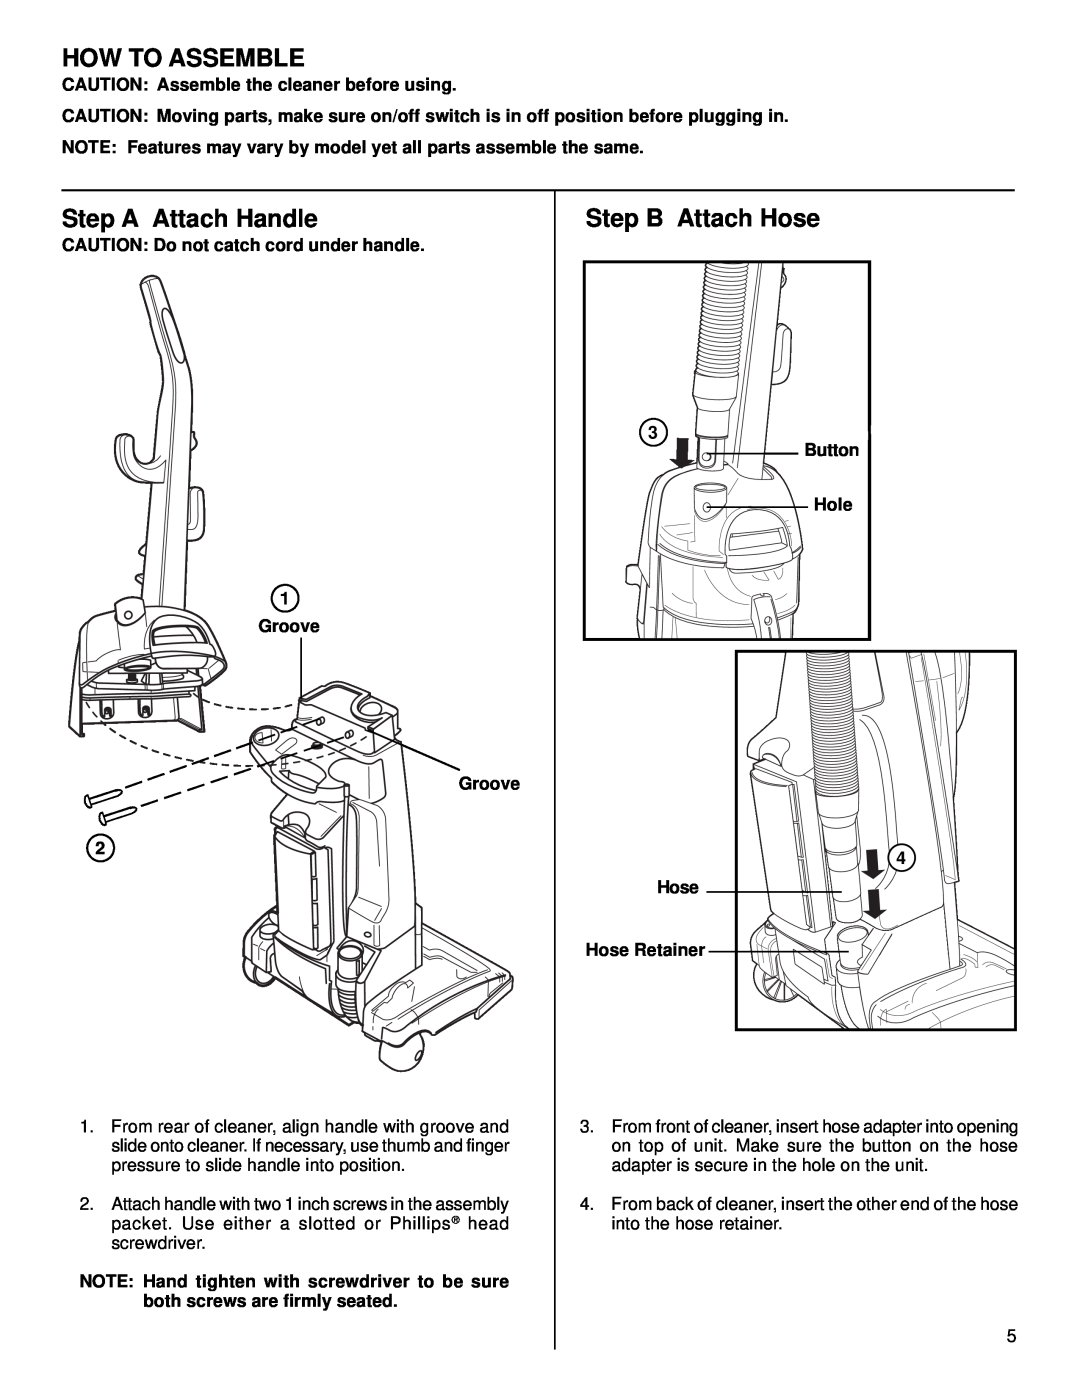 Eureka 4680, 4650 warranty How To Assemble, Step A Attach Handle, Step B Attach Hose 